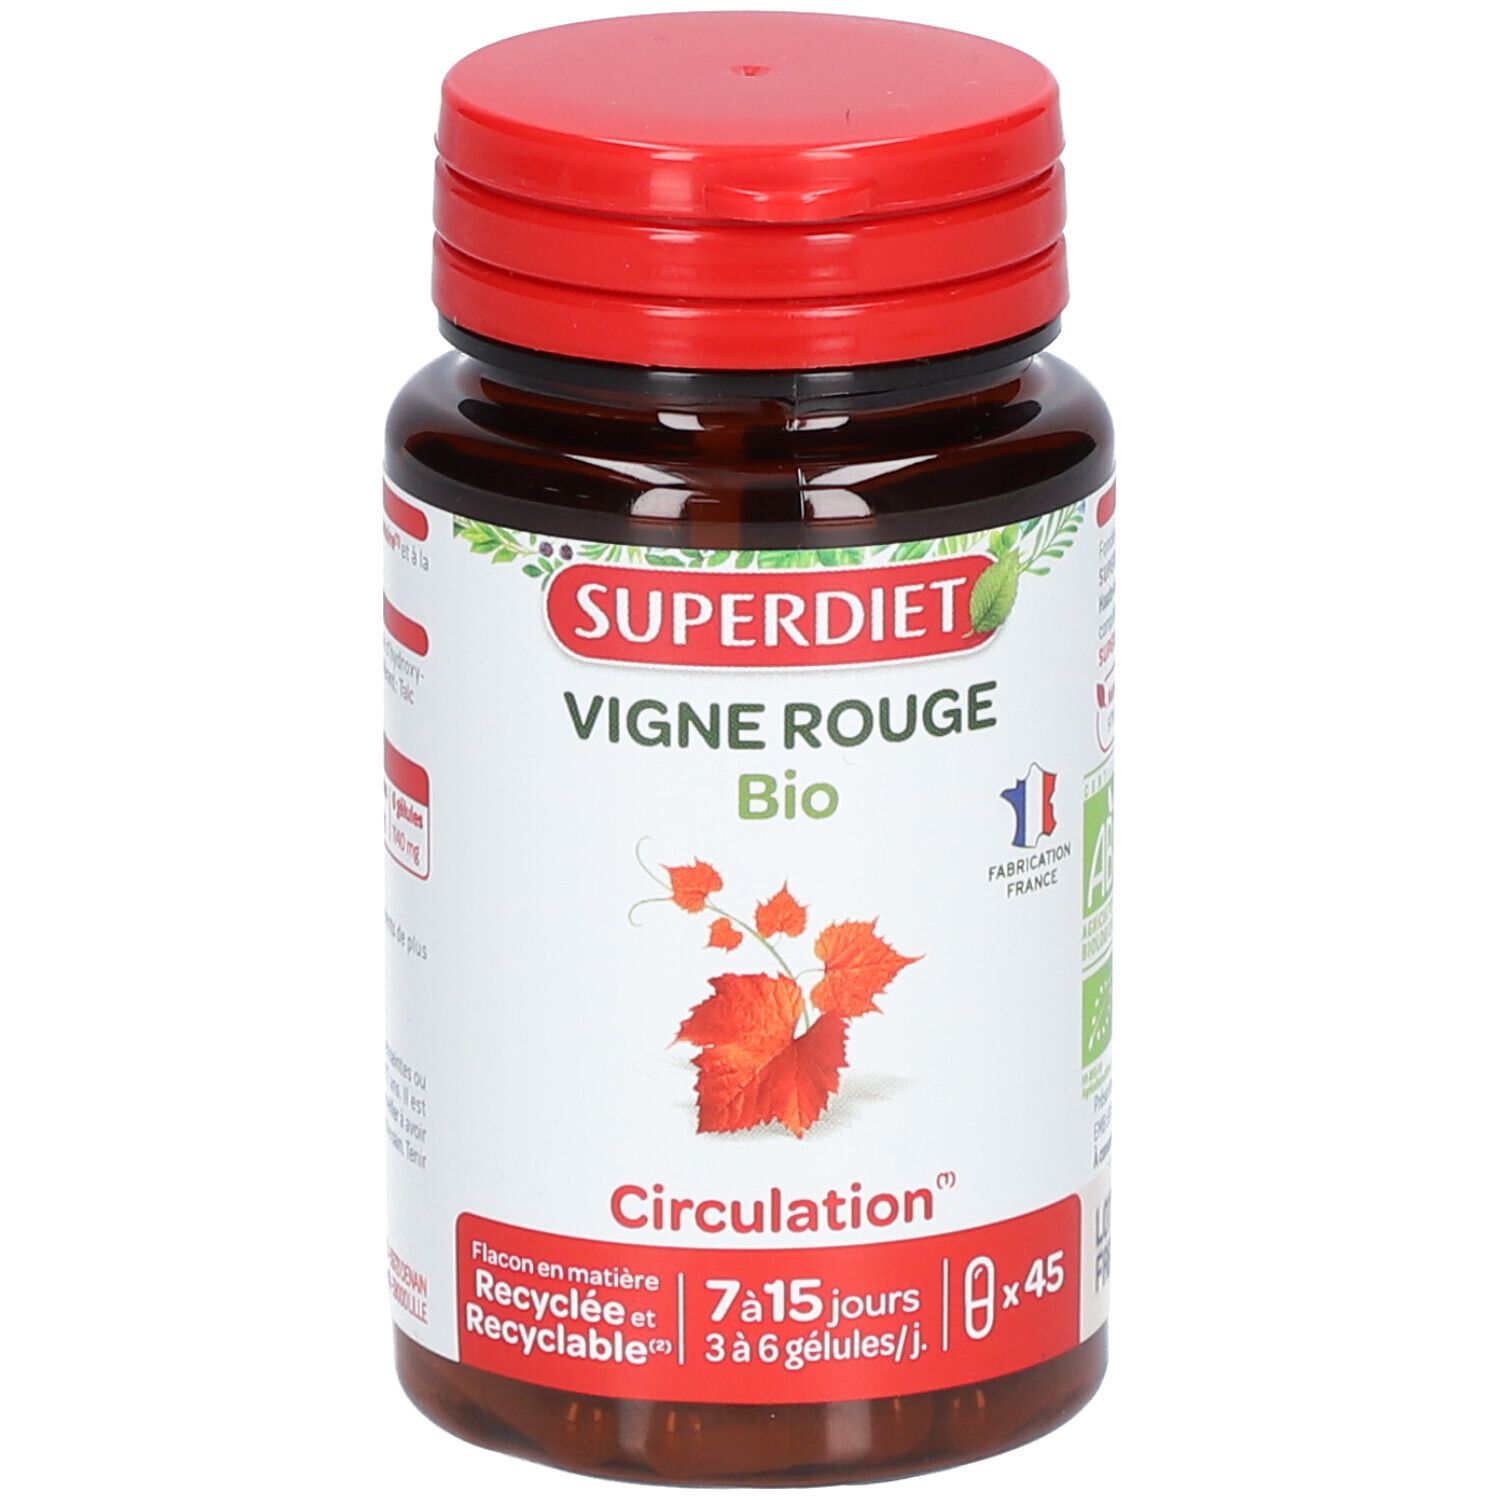 Super Diet Vigne Rouge Bio Circulation